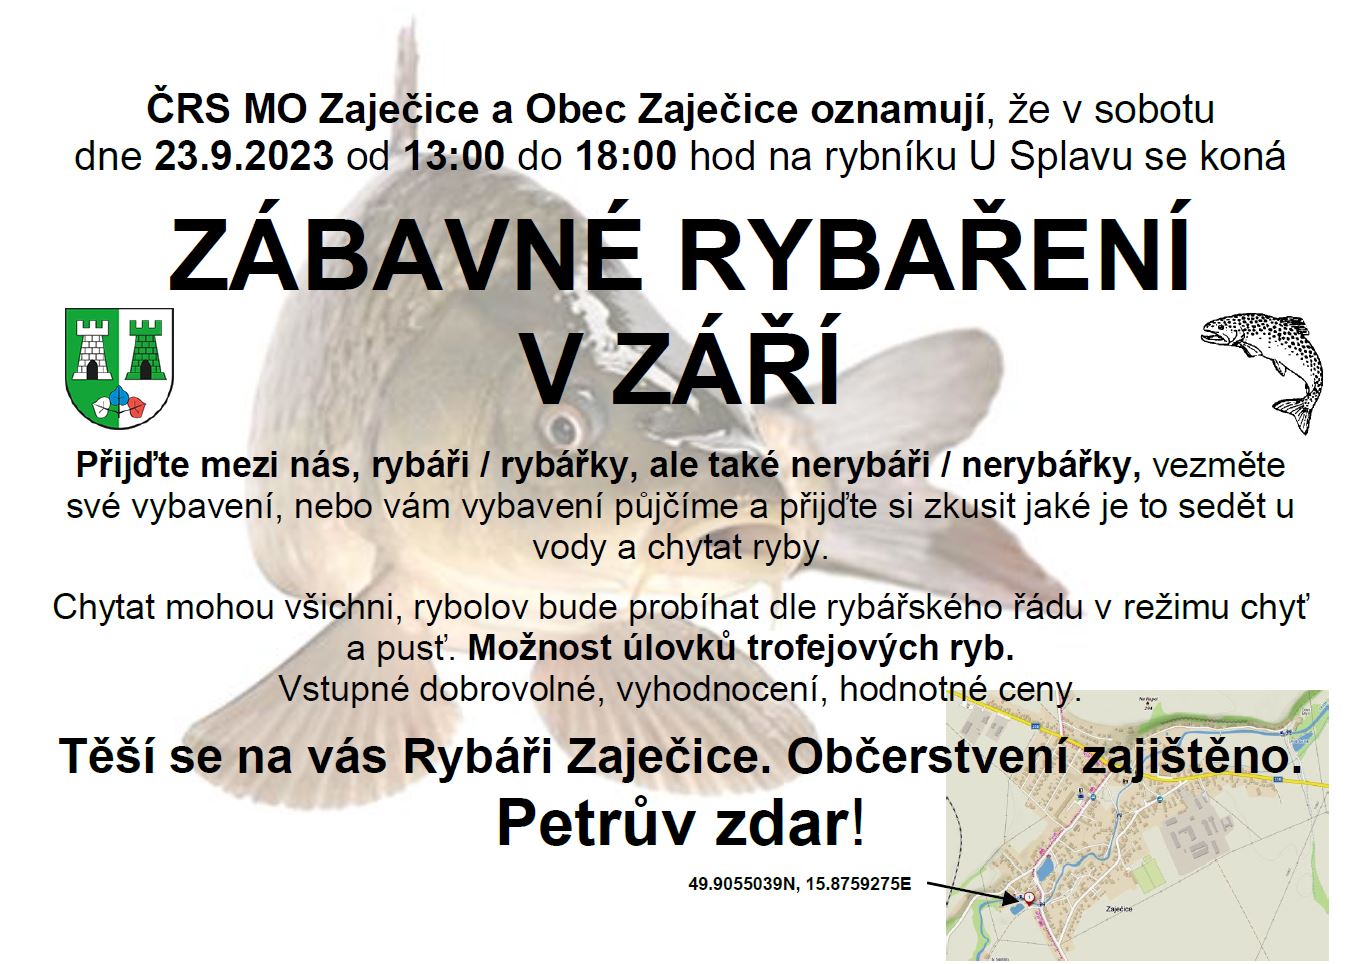 2023-09-23_Zabavne_rybareni_v_zari.jpg